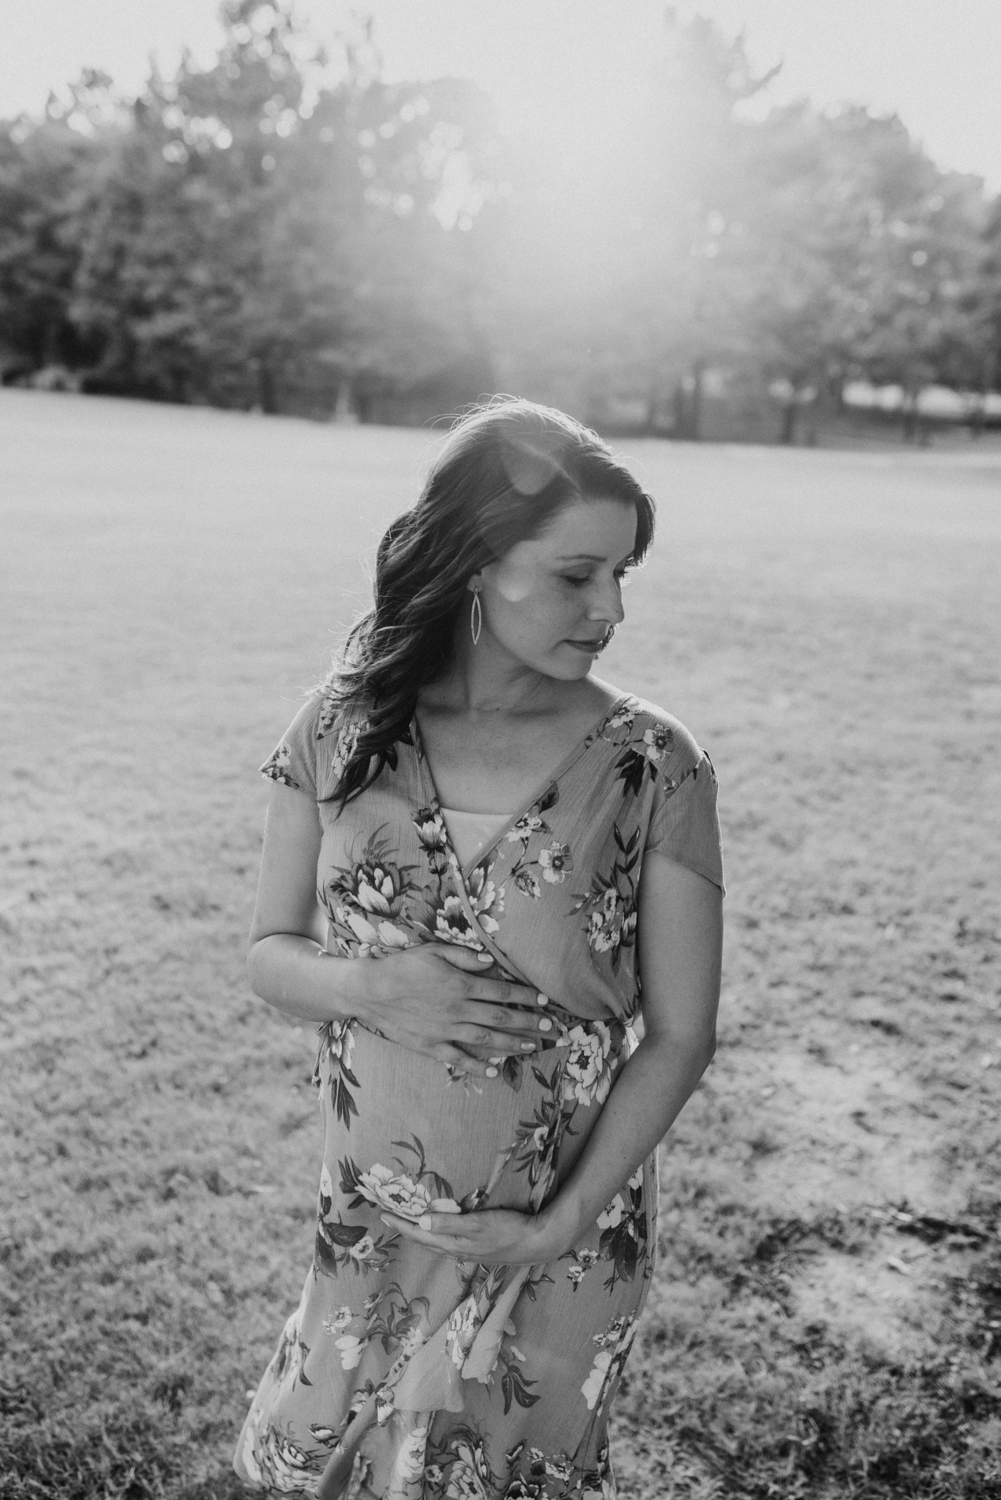 maternitysession-theclevelands-babybump-mommytobe-pregnancypictures-maternitysessions-houstontexas-texas-dowtownhouston-loscastrophotography-22.jpg